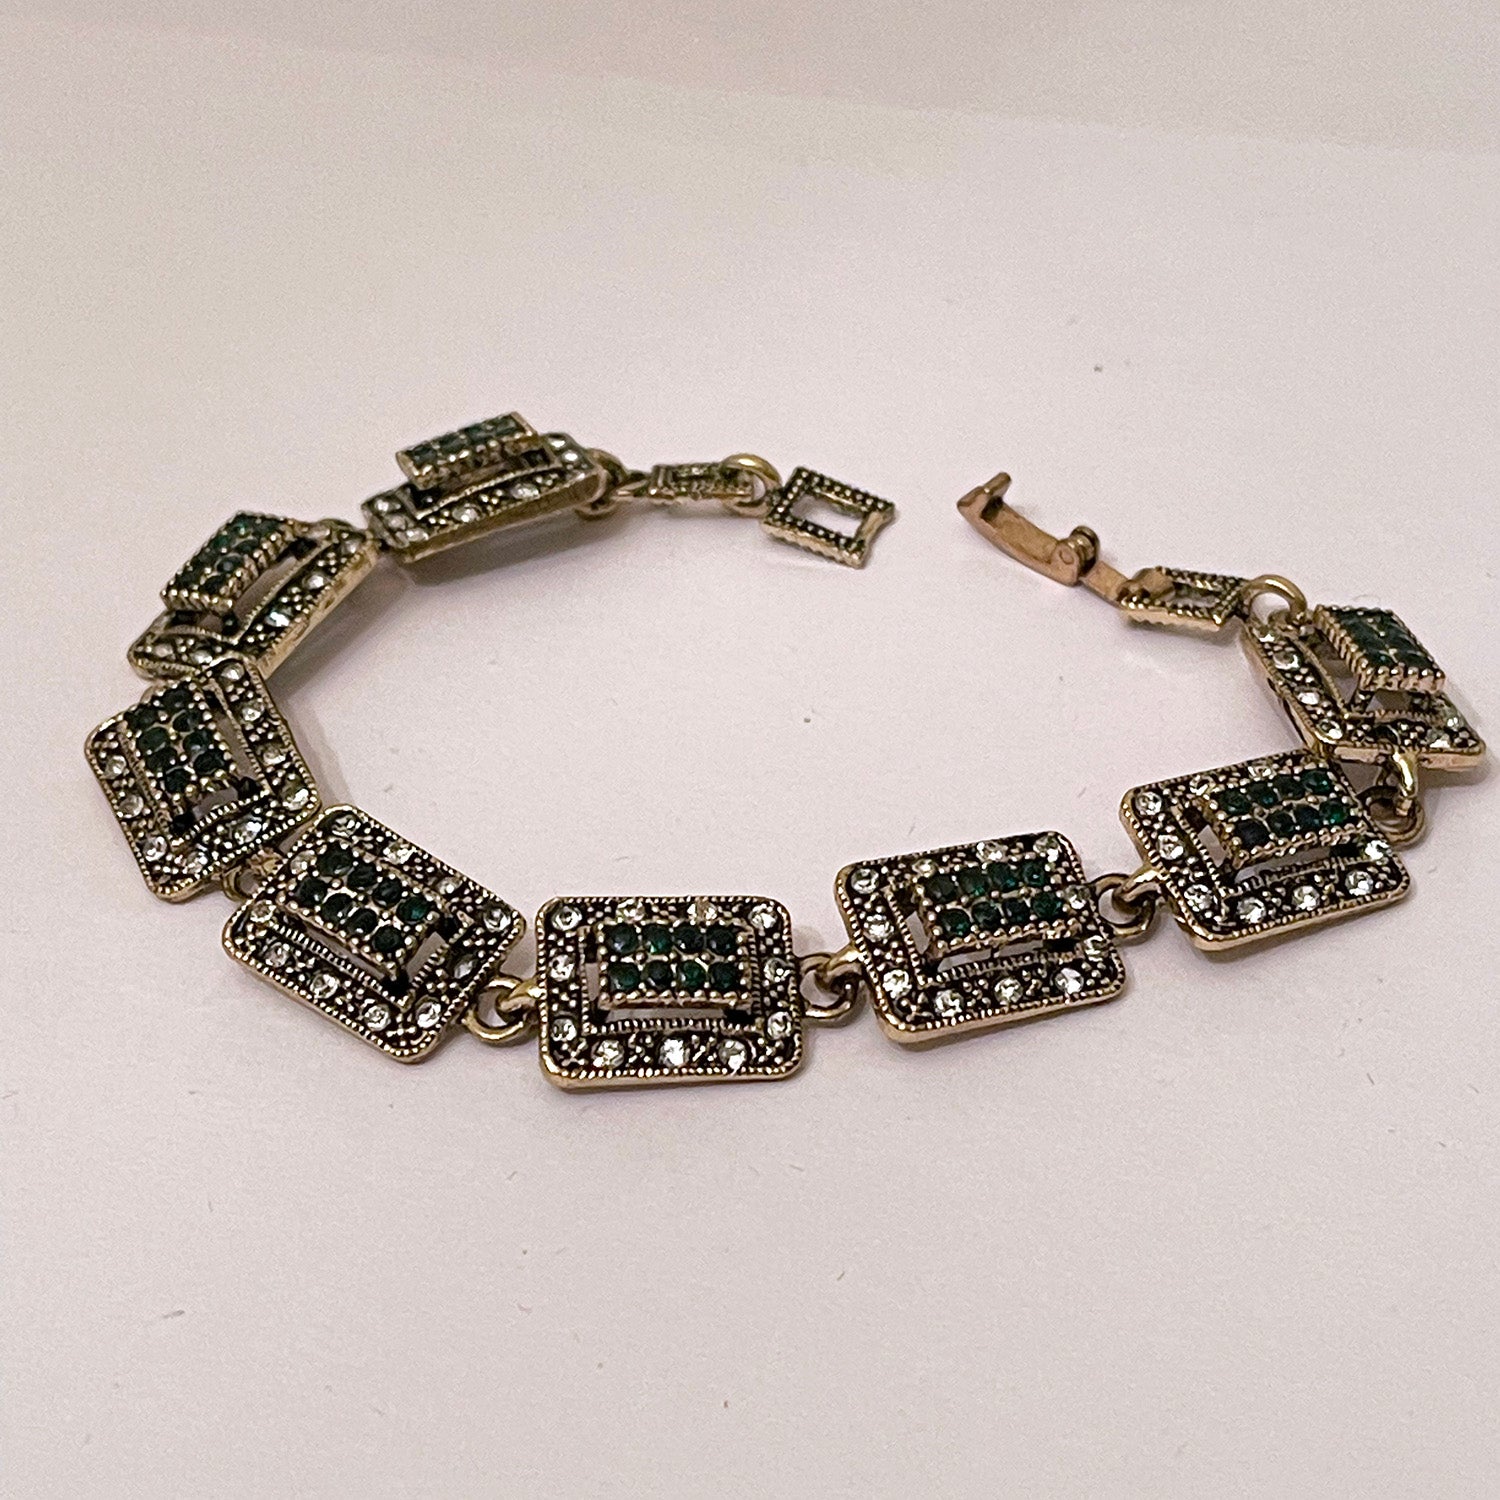 Luxury Stainless Steel & Brass Bracelet Designed with Zirconia Stone-For Her